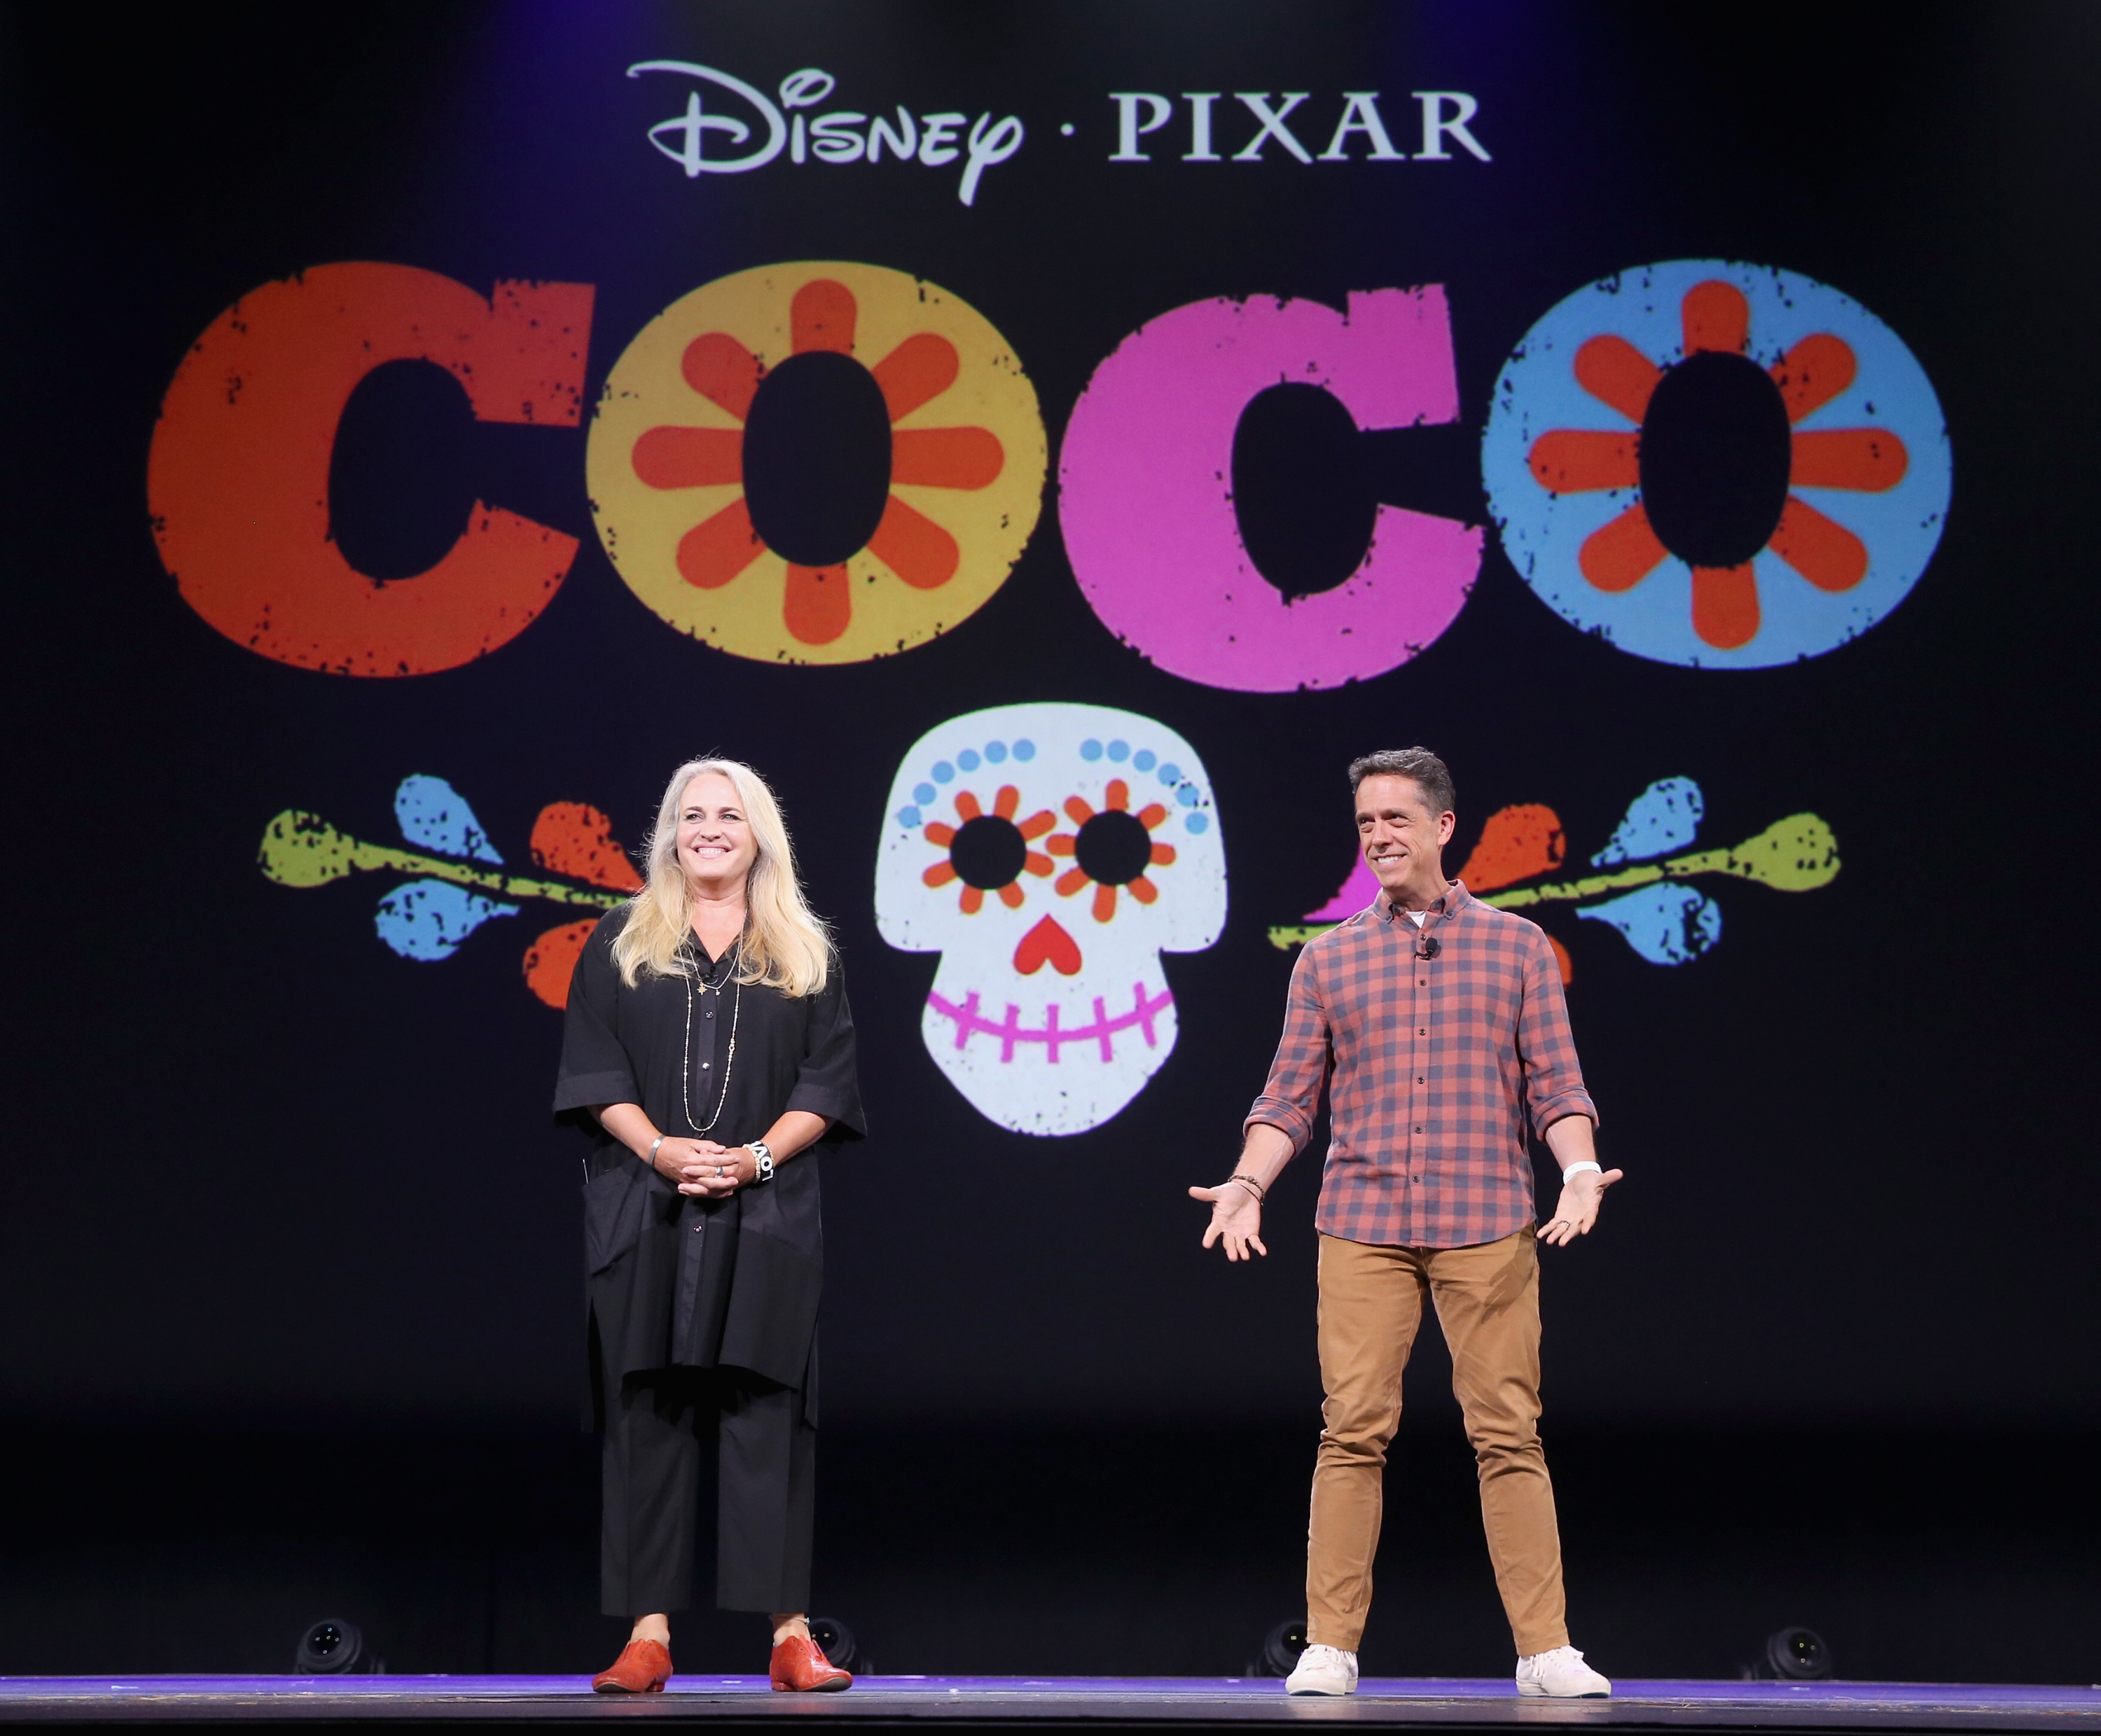 Coco officially announced as Pixar's 2017 film | The Disney Blog